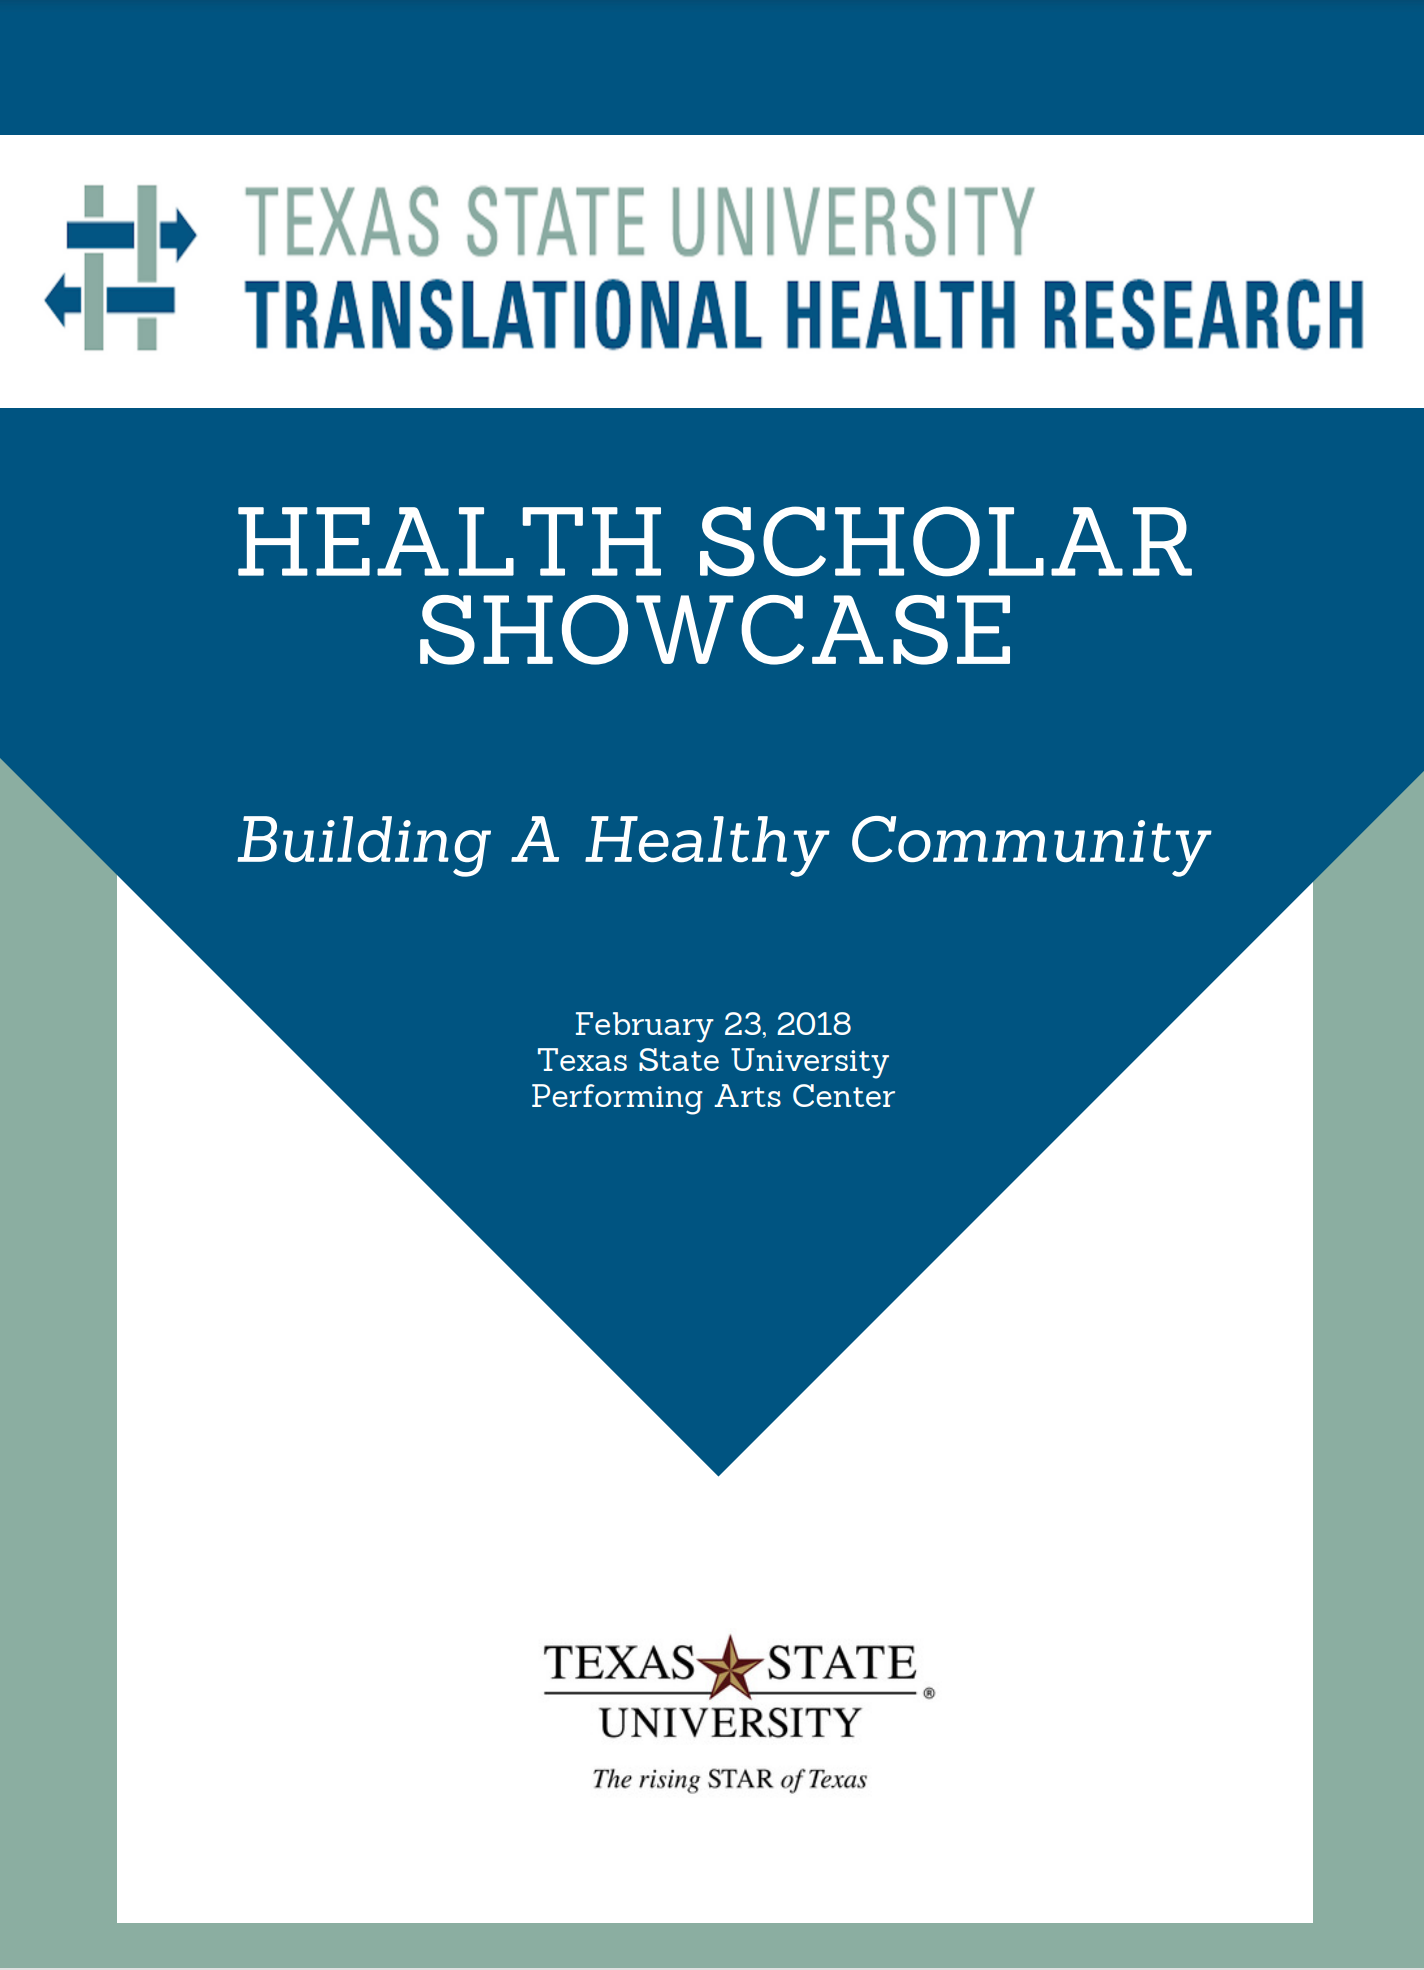 Health Scholar Showcase 2018 program